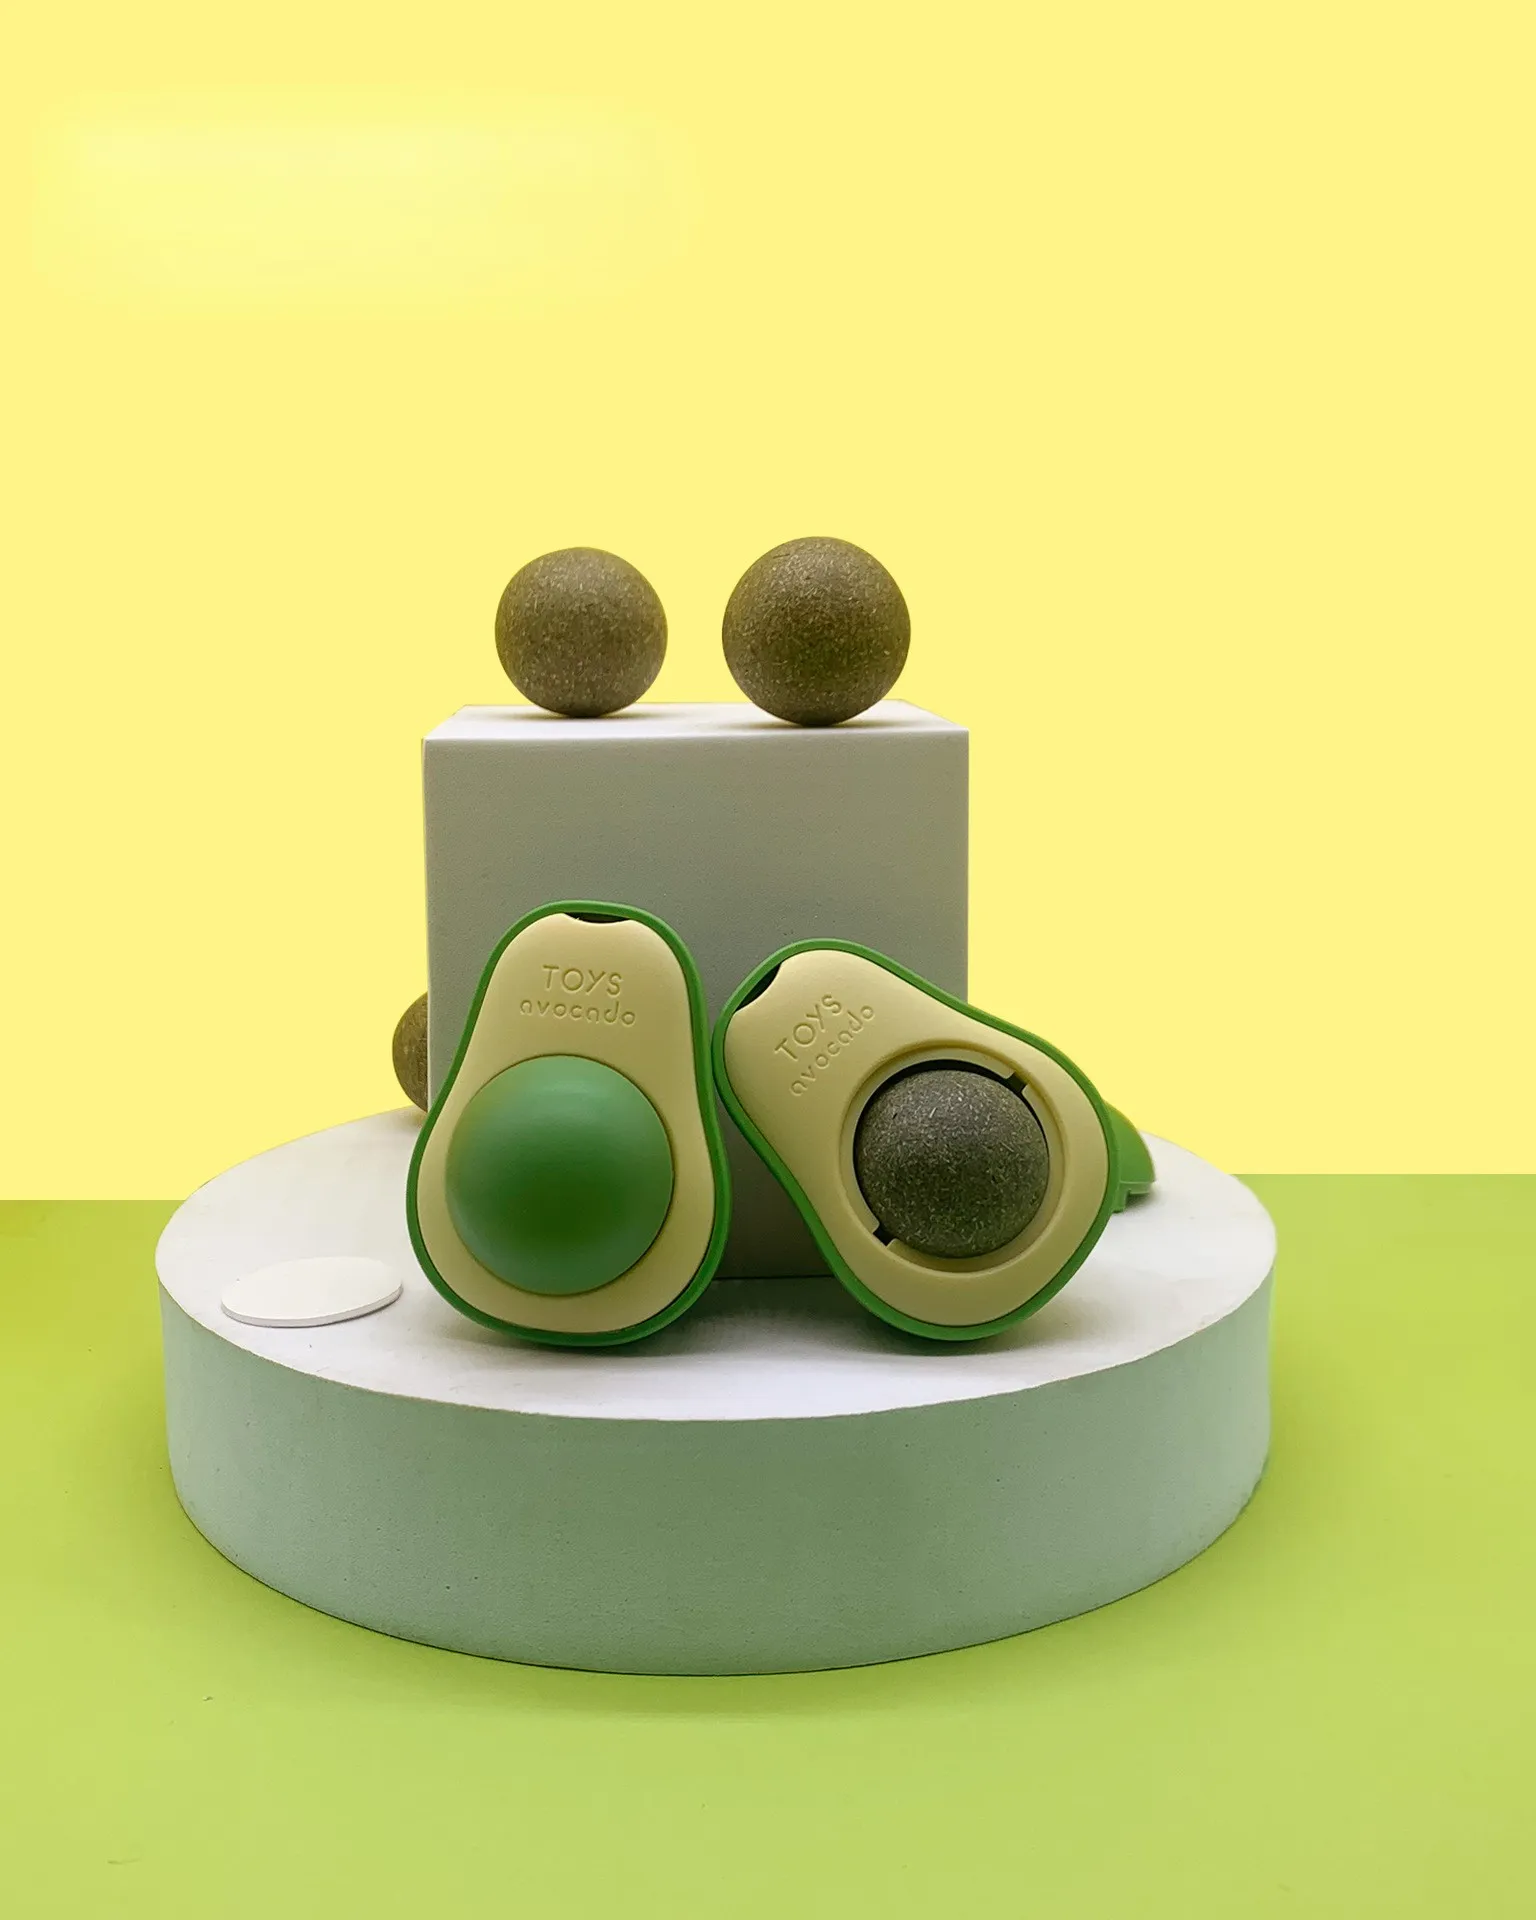 UT 2022 amazon vendita calda interact fruit pet cat avocado catnip ball toy set mint Design 360 rotazione catnip wall ball